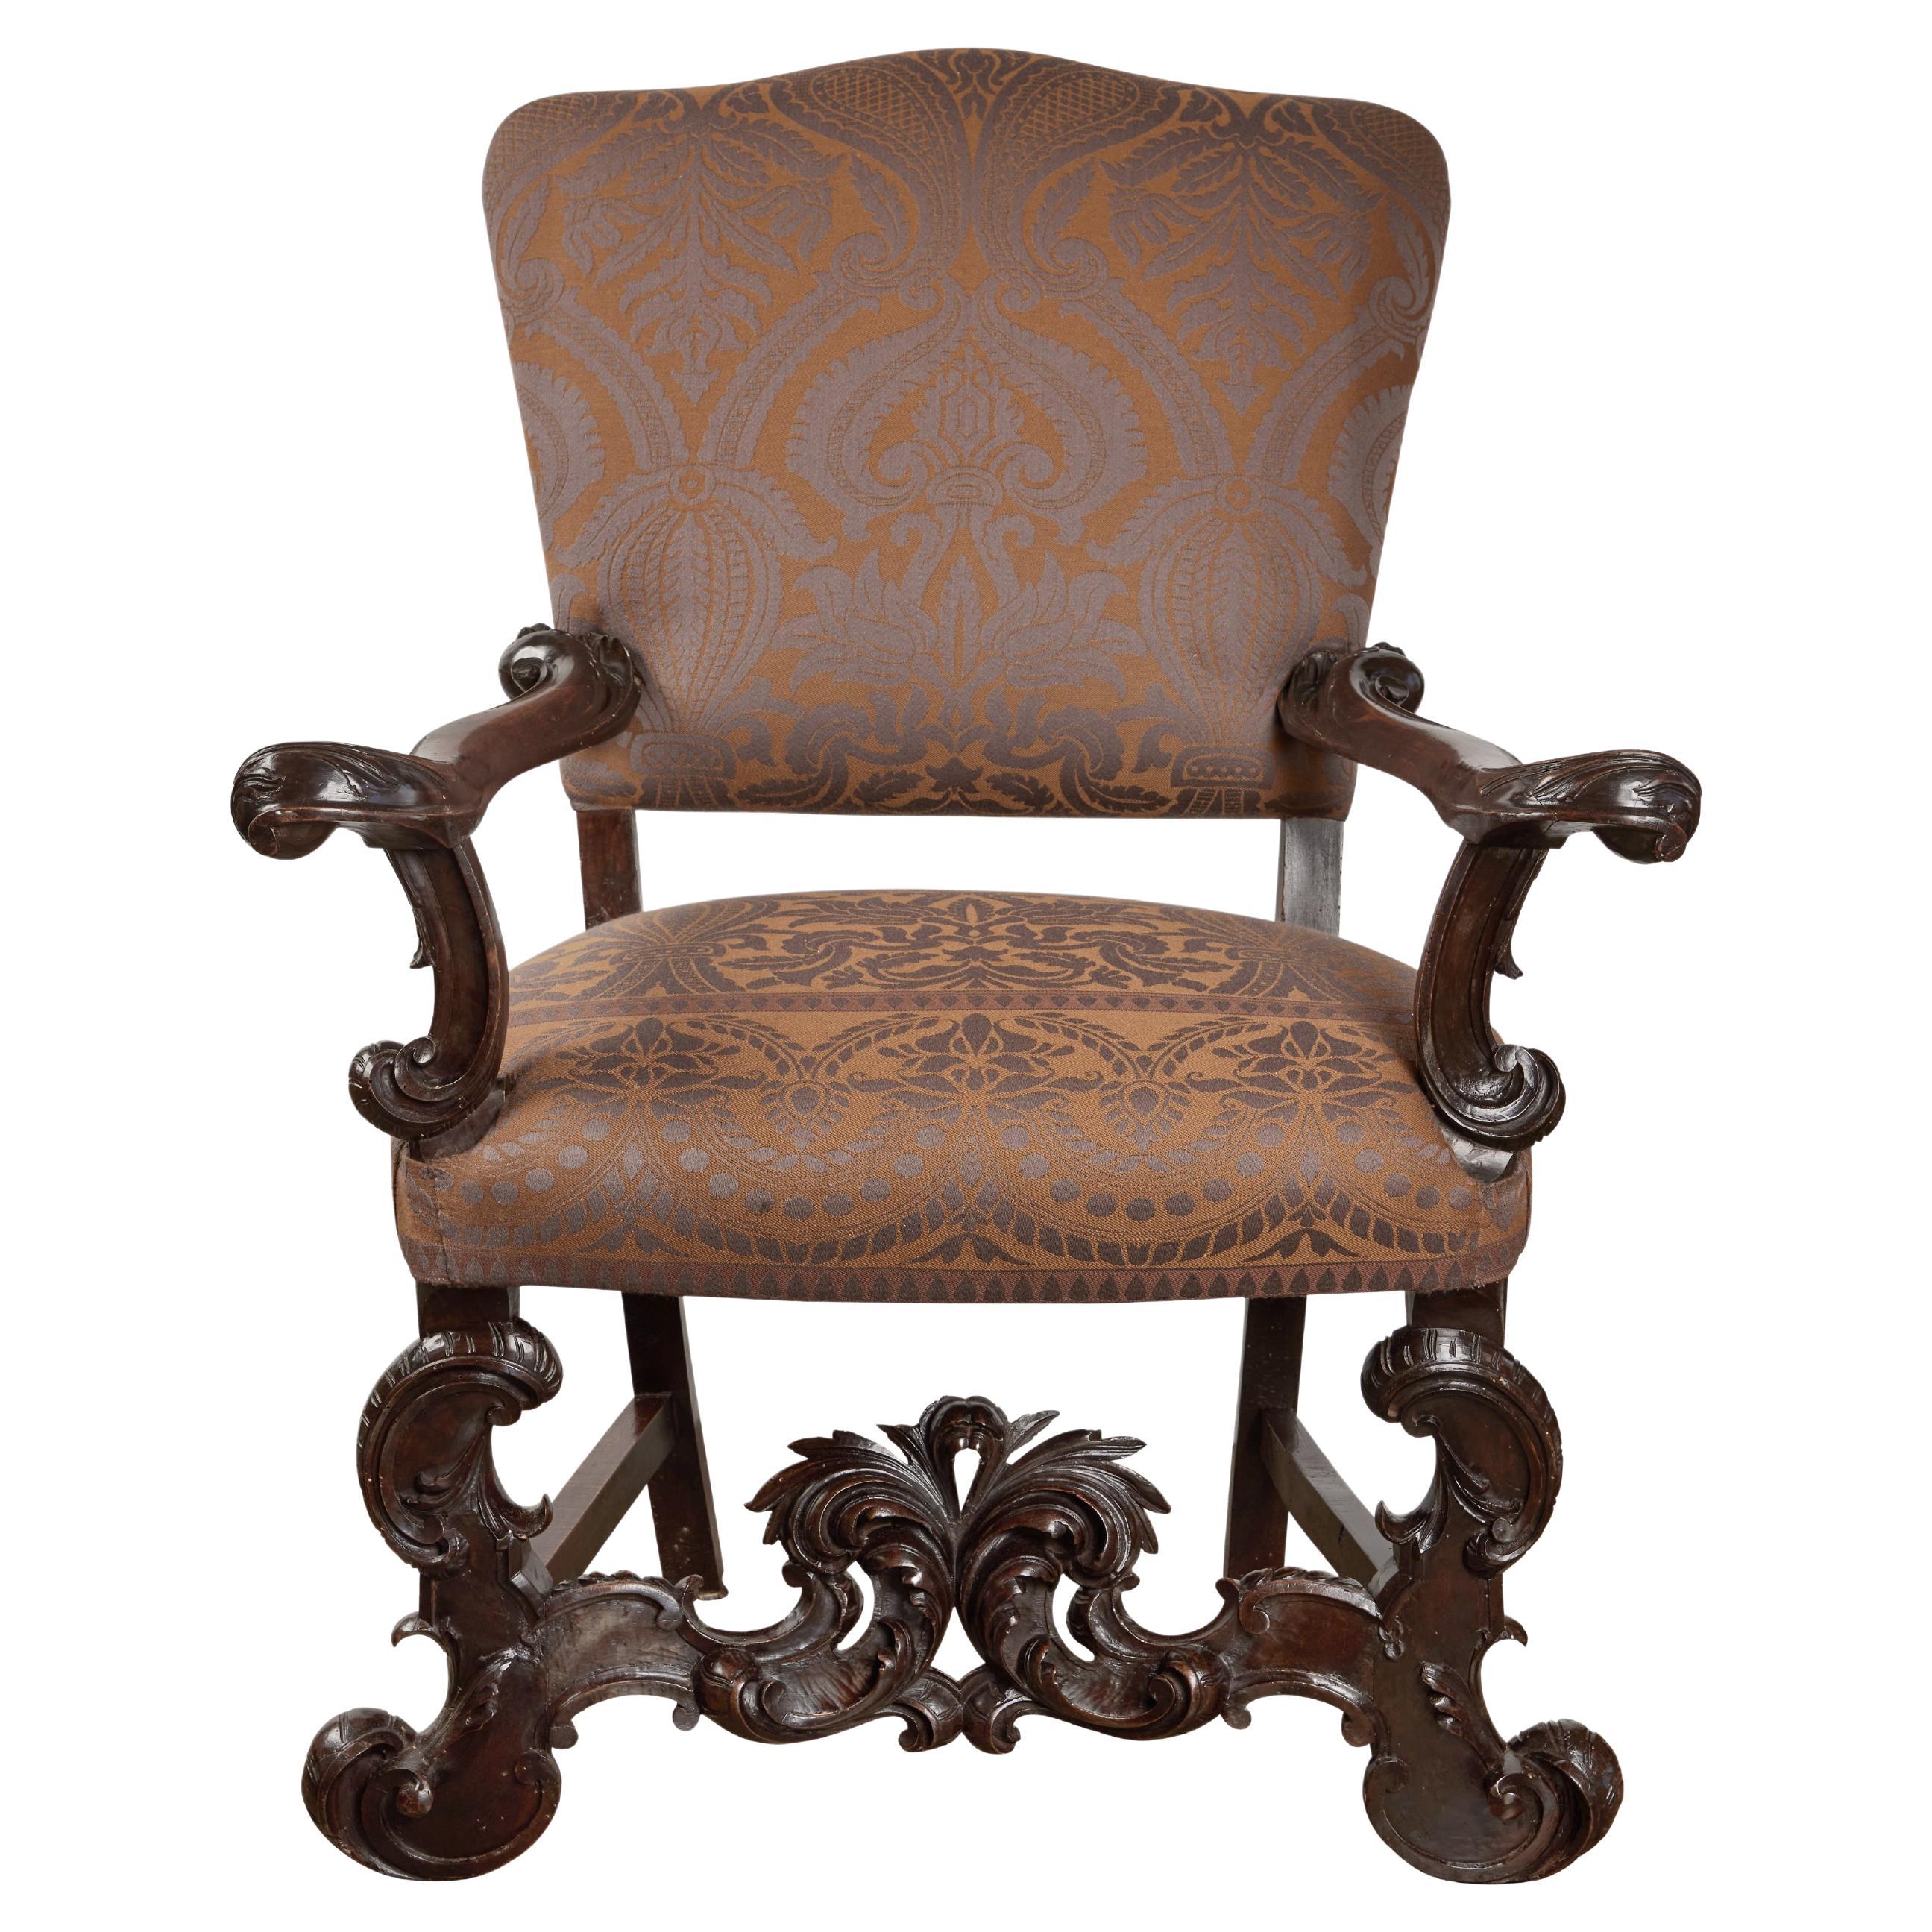 "His" Venetian Walnut Arm Chair For Sale